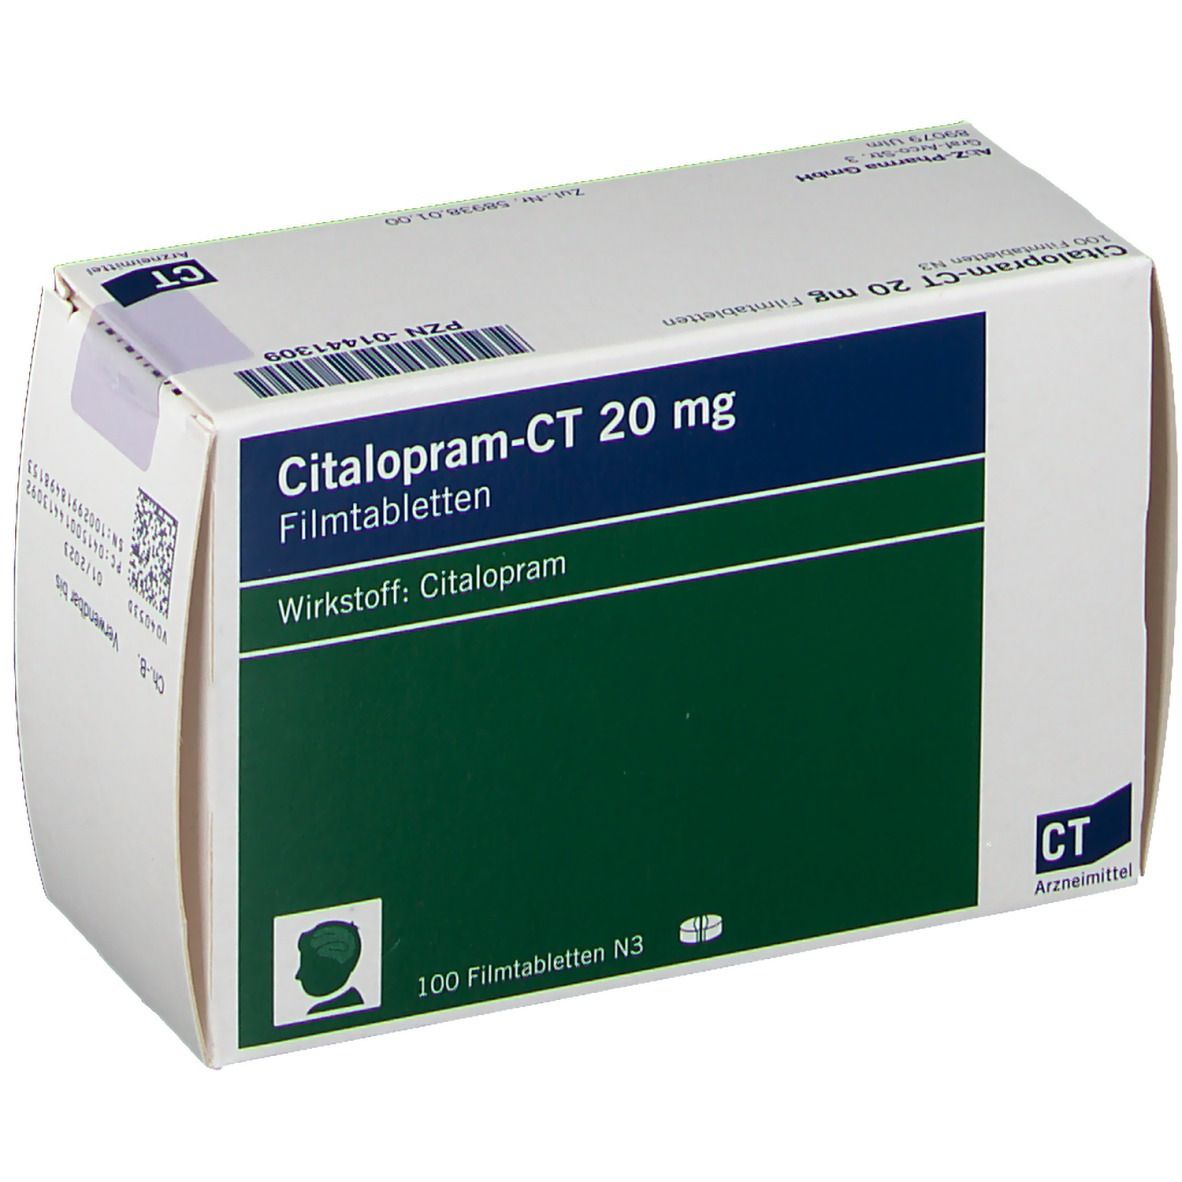 Citalopram - Ct 20Mg